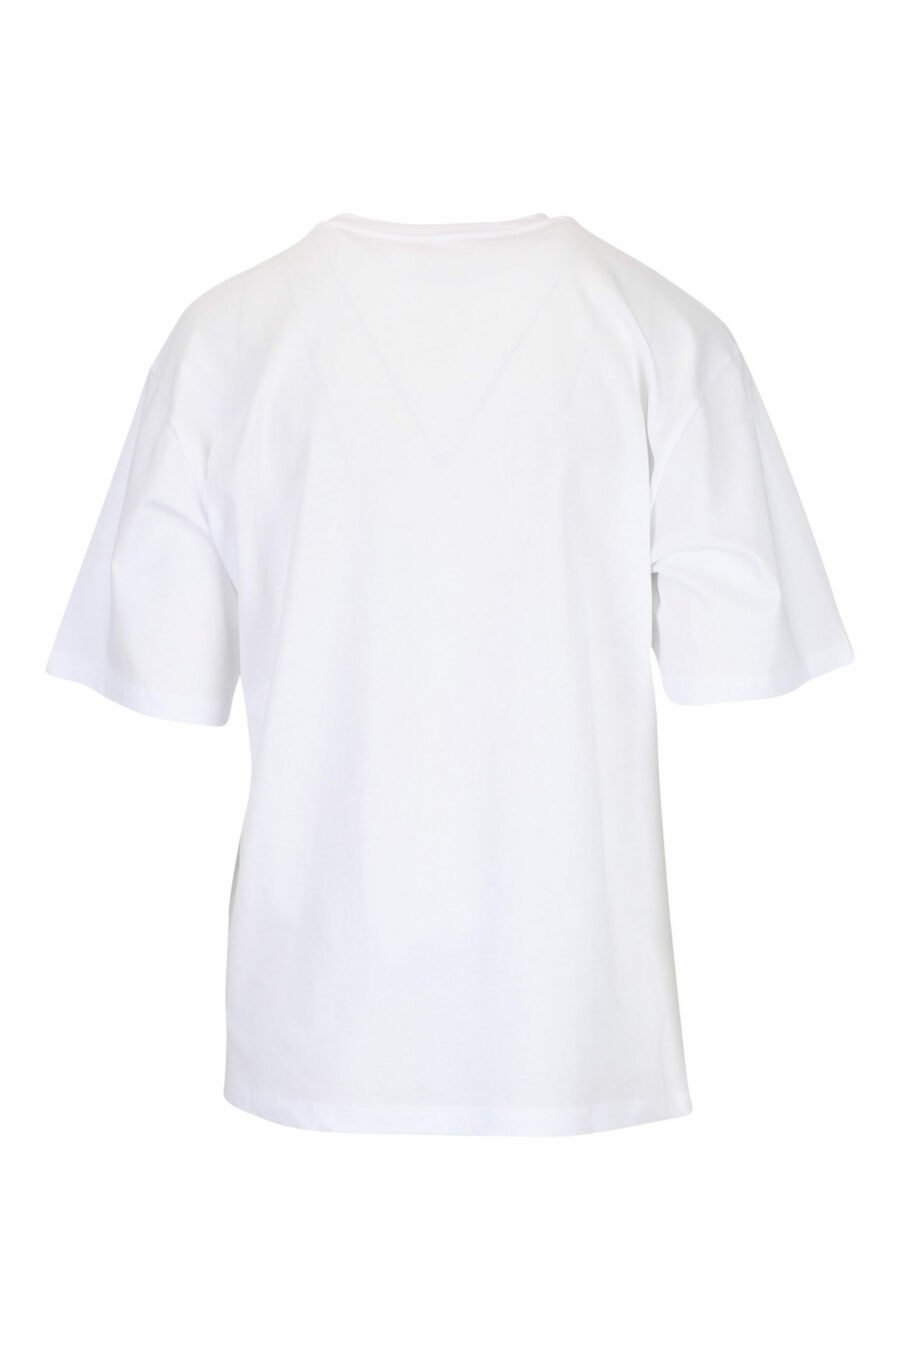 Camiseta blanca con estampado optico - 8054943308046 1 scaled